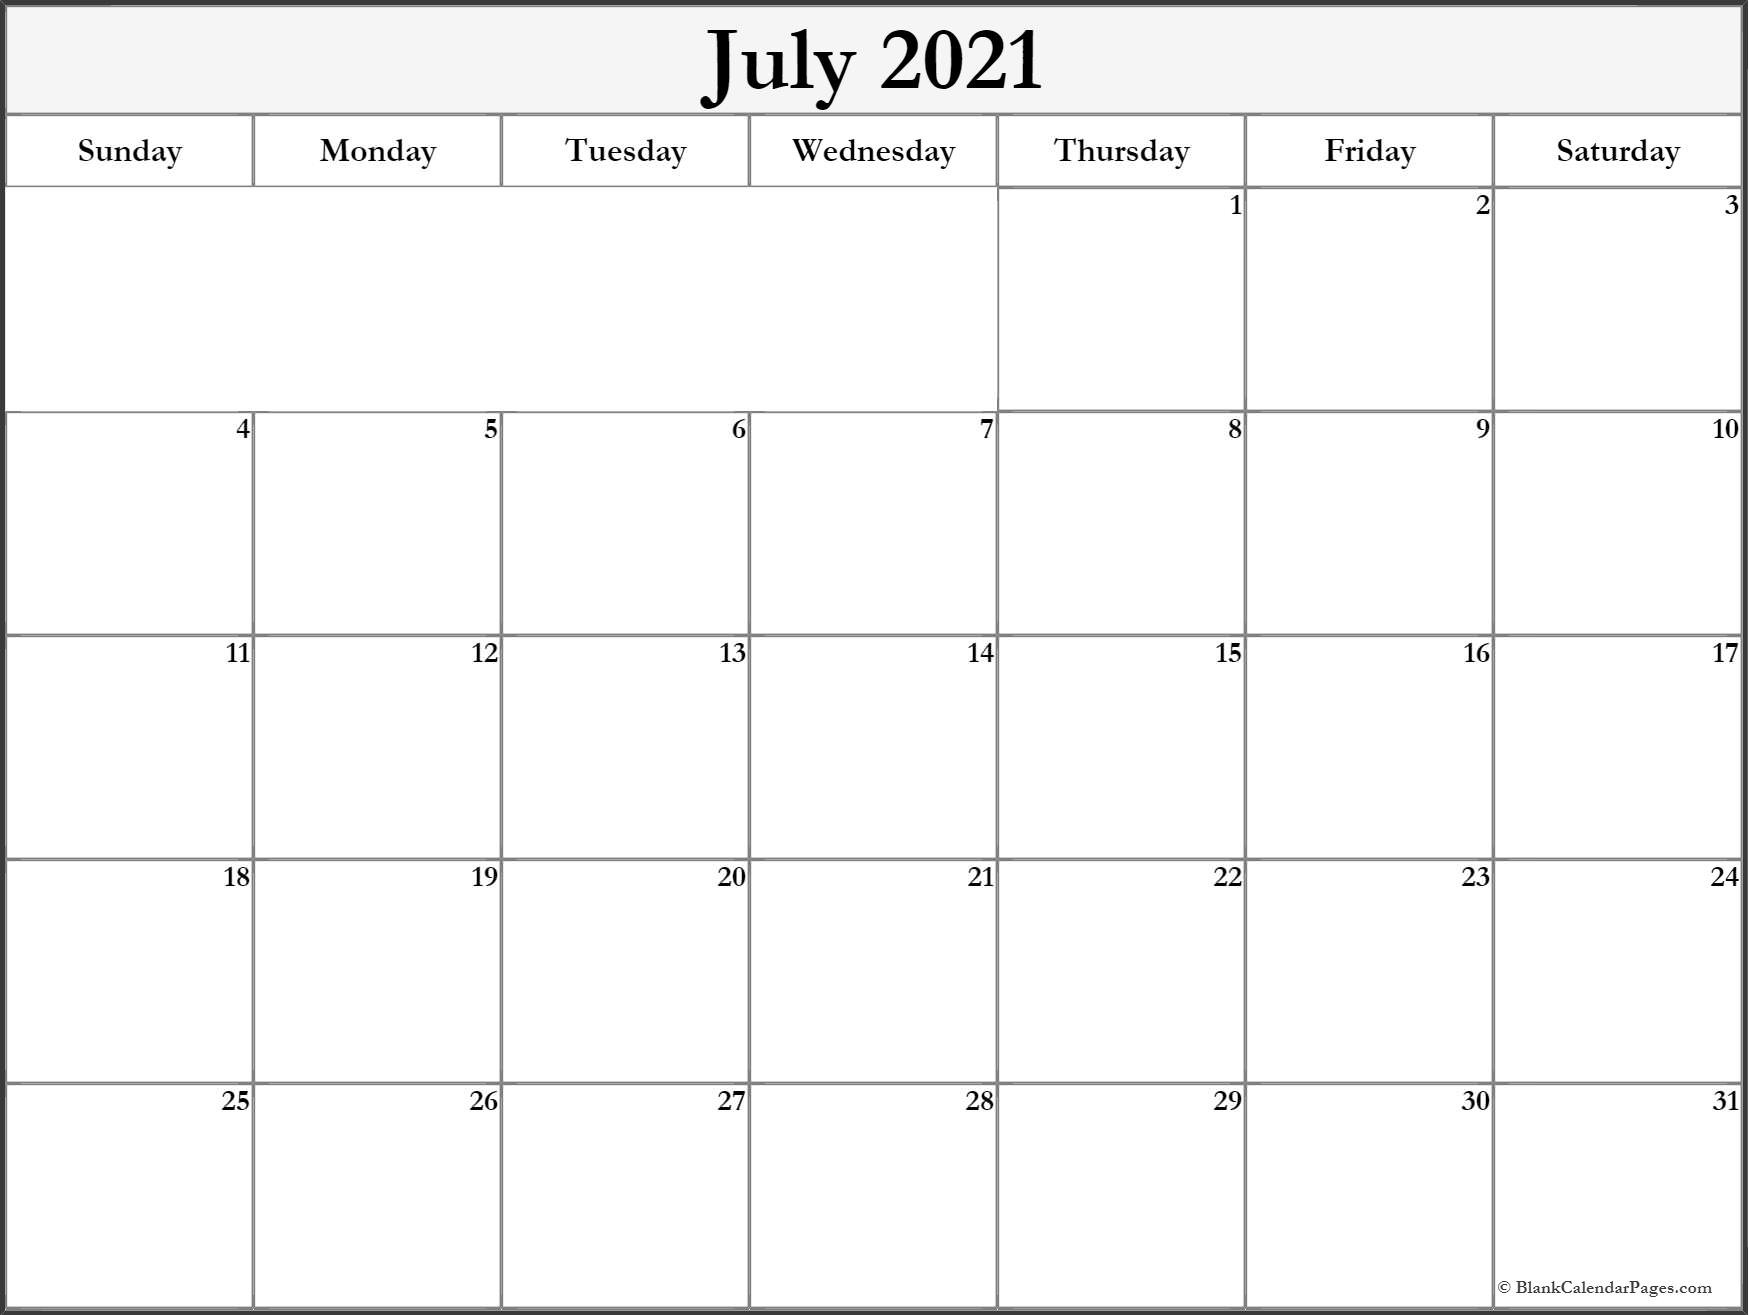 July 2021 Blank Calendar Templates.-Bill Calendar May 2021